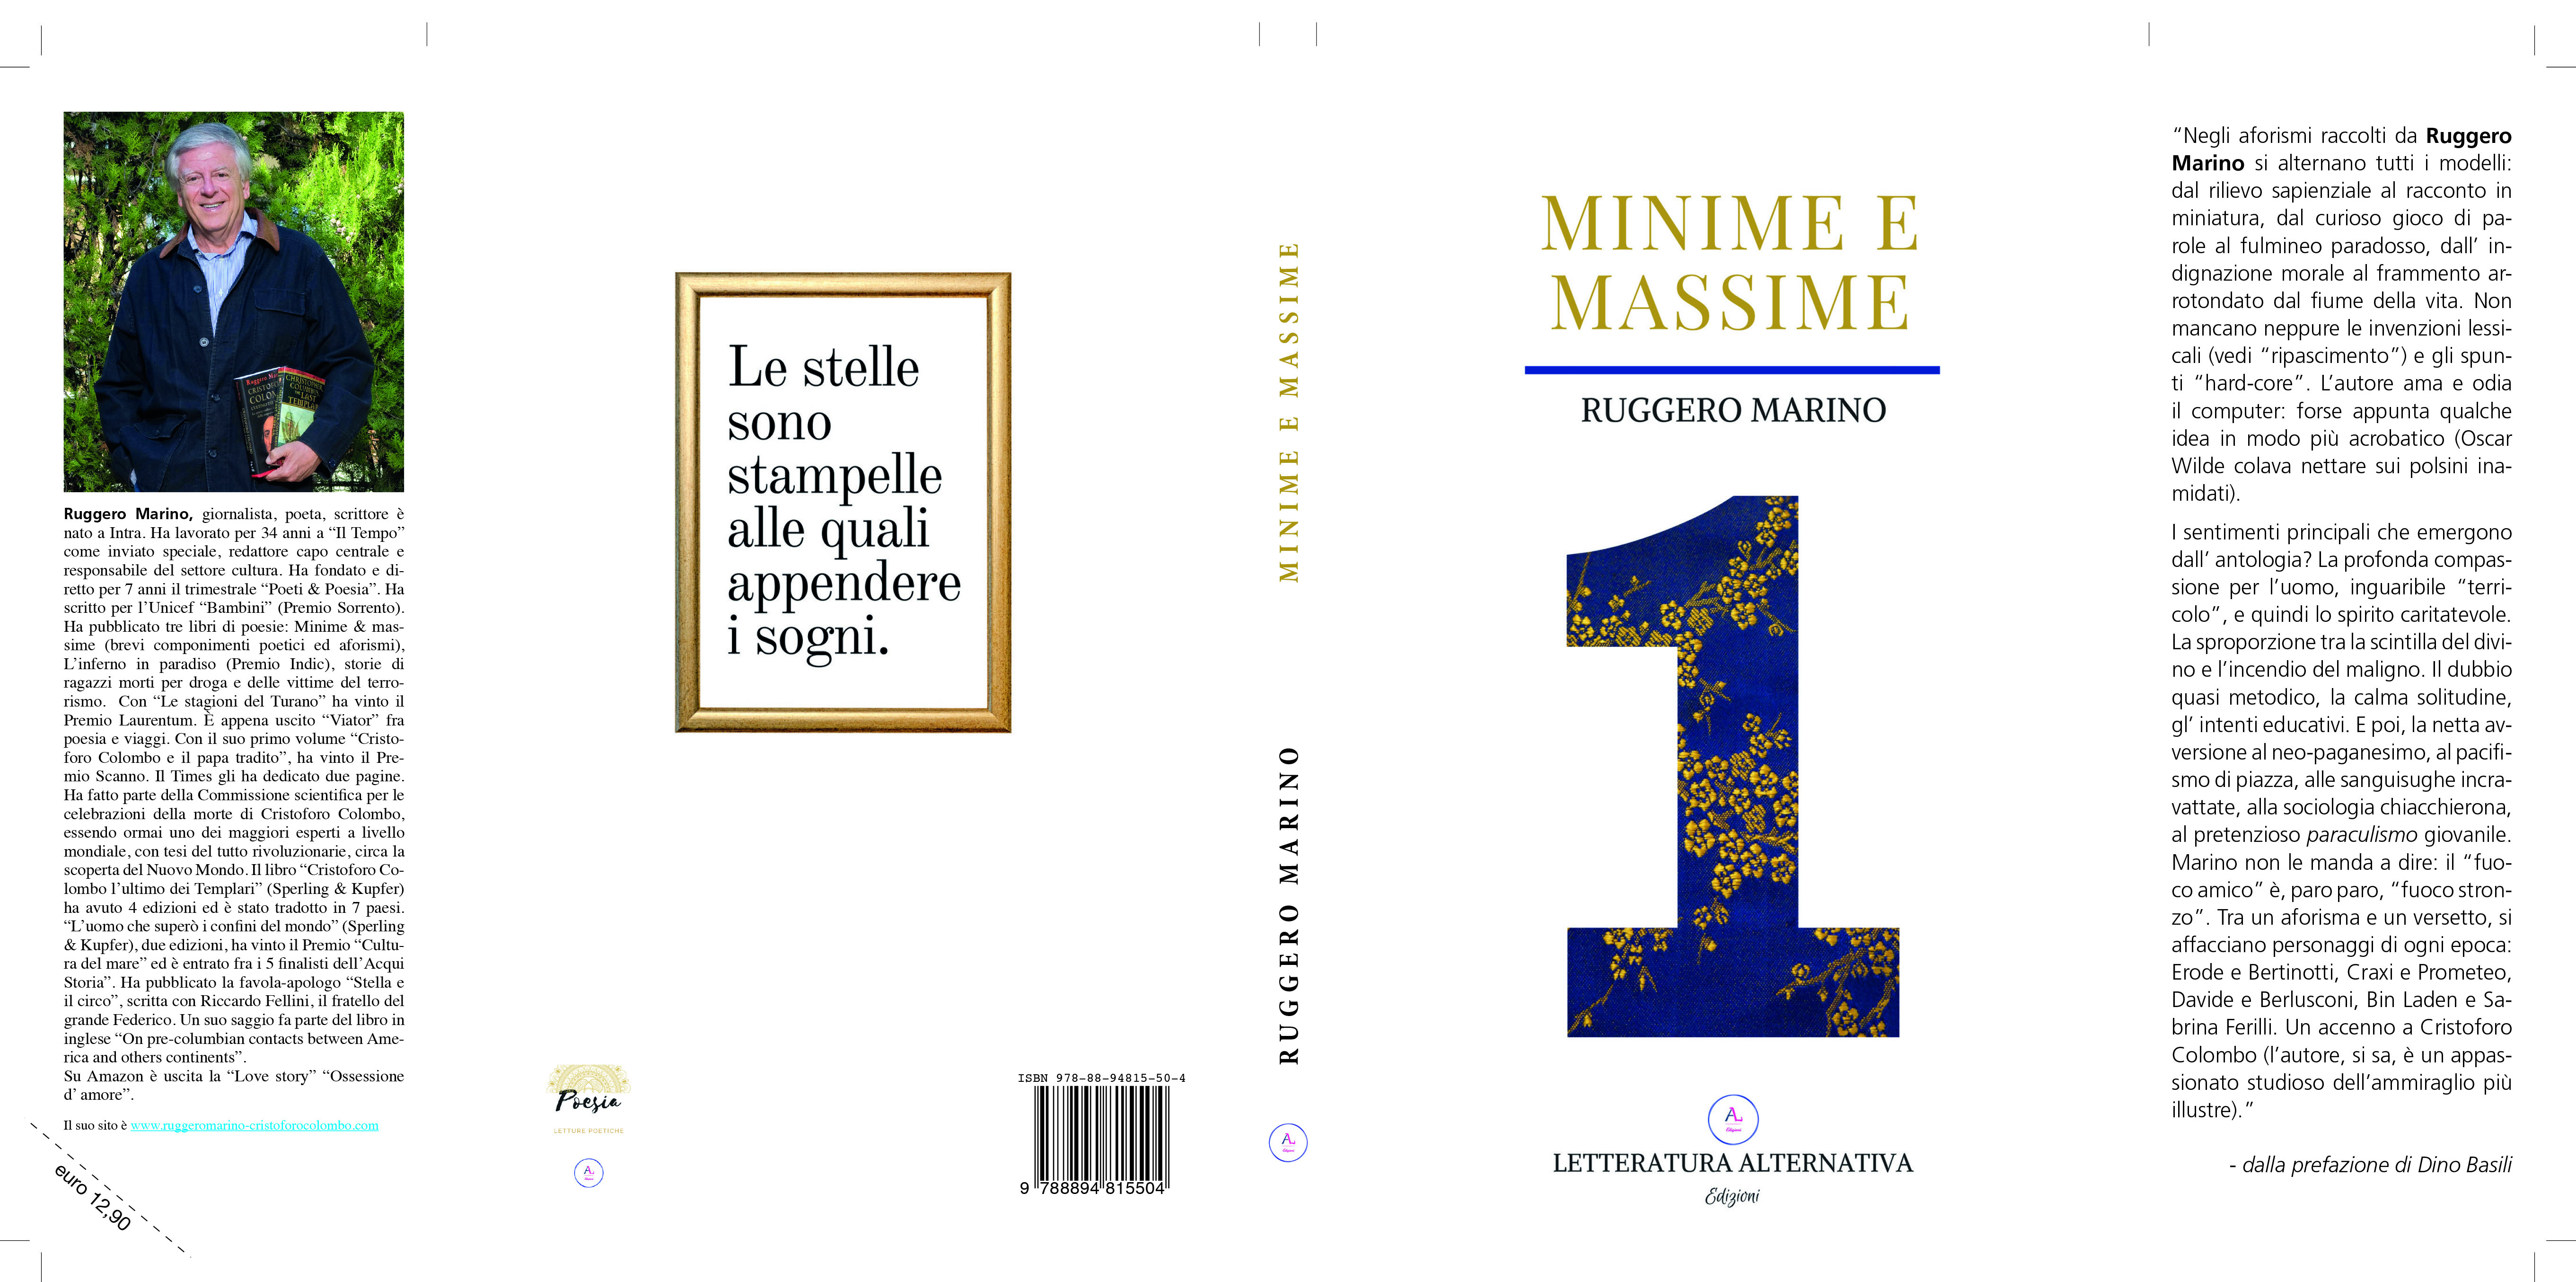 Ruggero Marino copertina MINIME E MASSIME 1